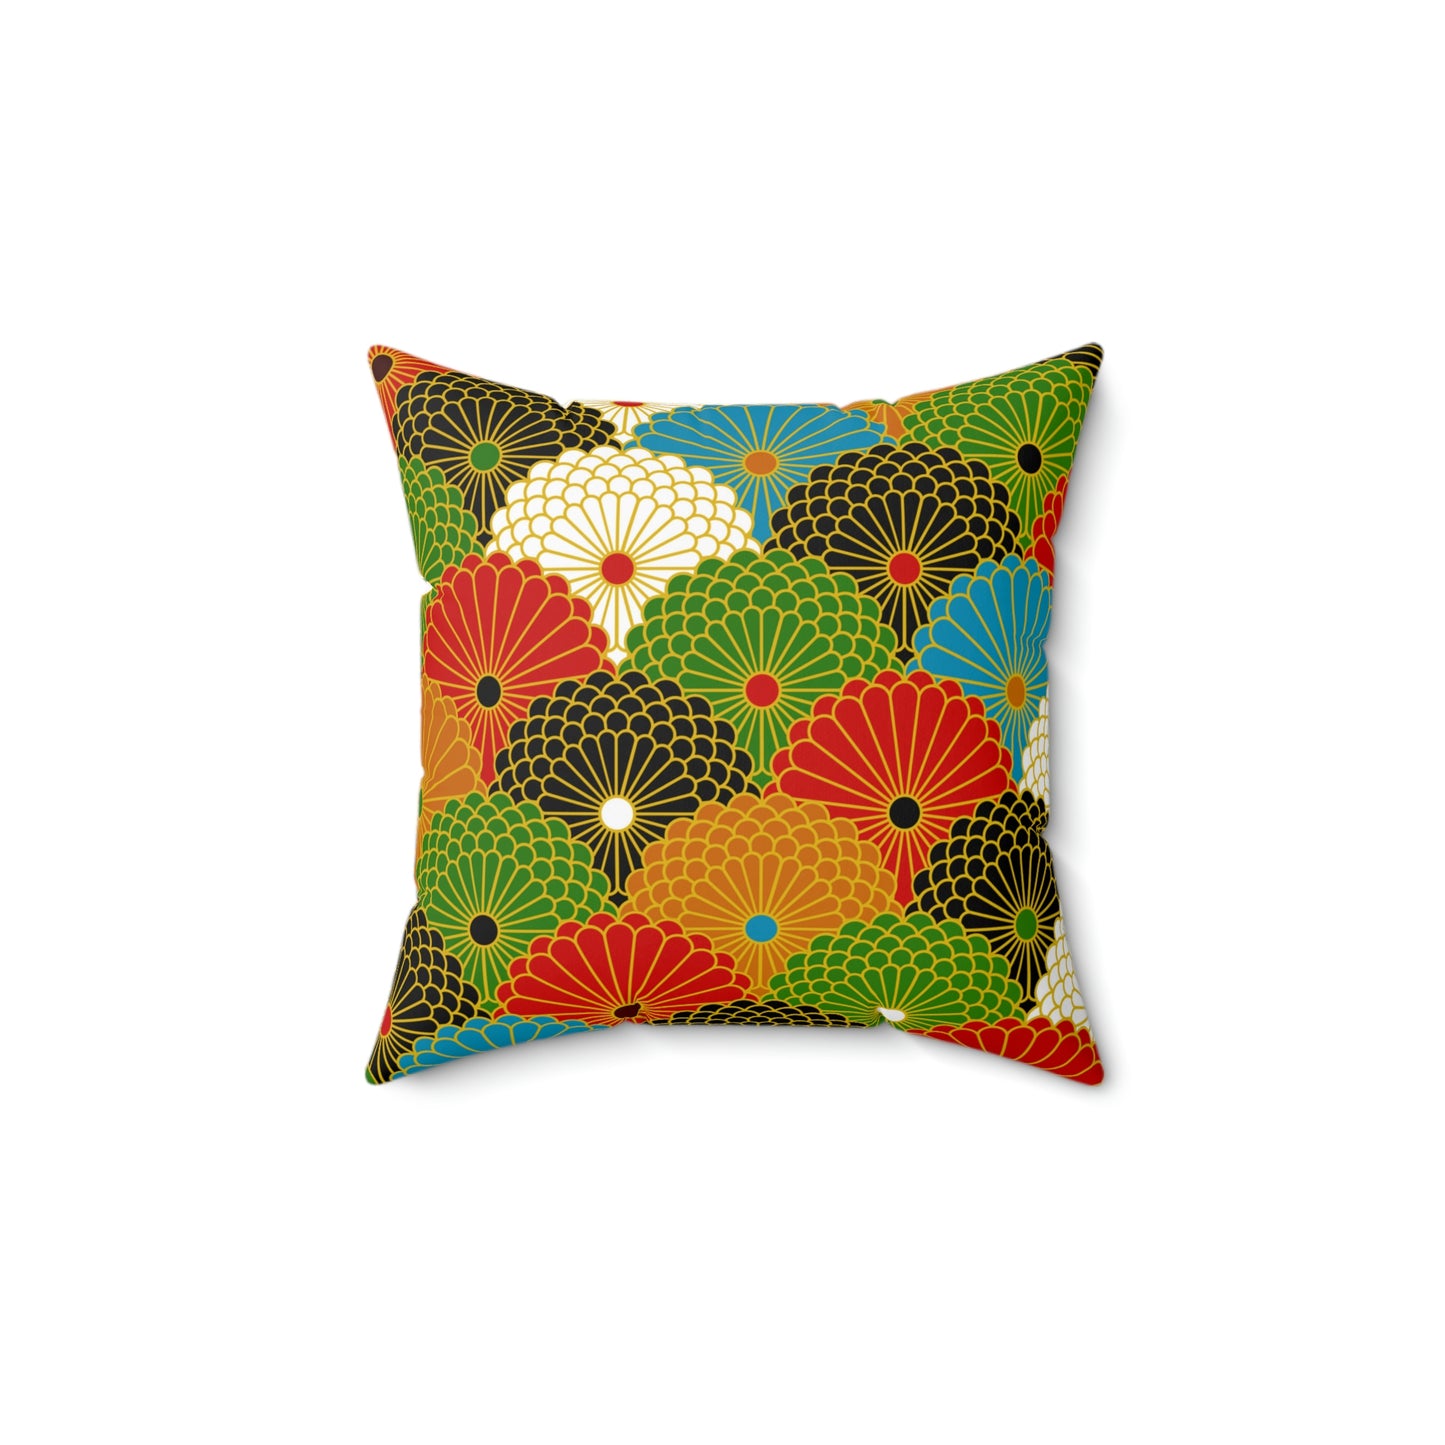 Colorful & Beautiful Asian Pattern Spun Polyester Square Pillow